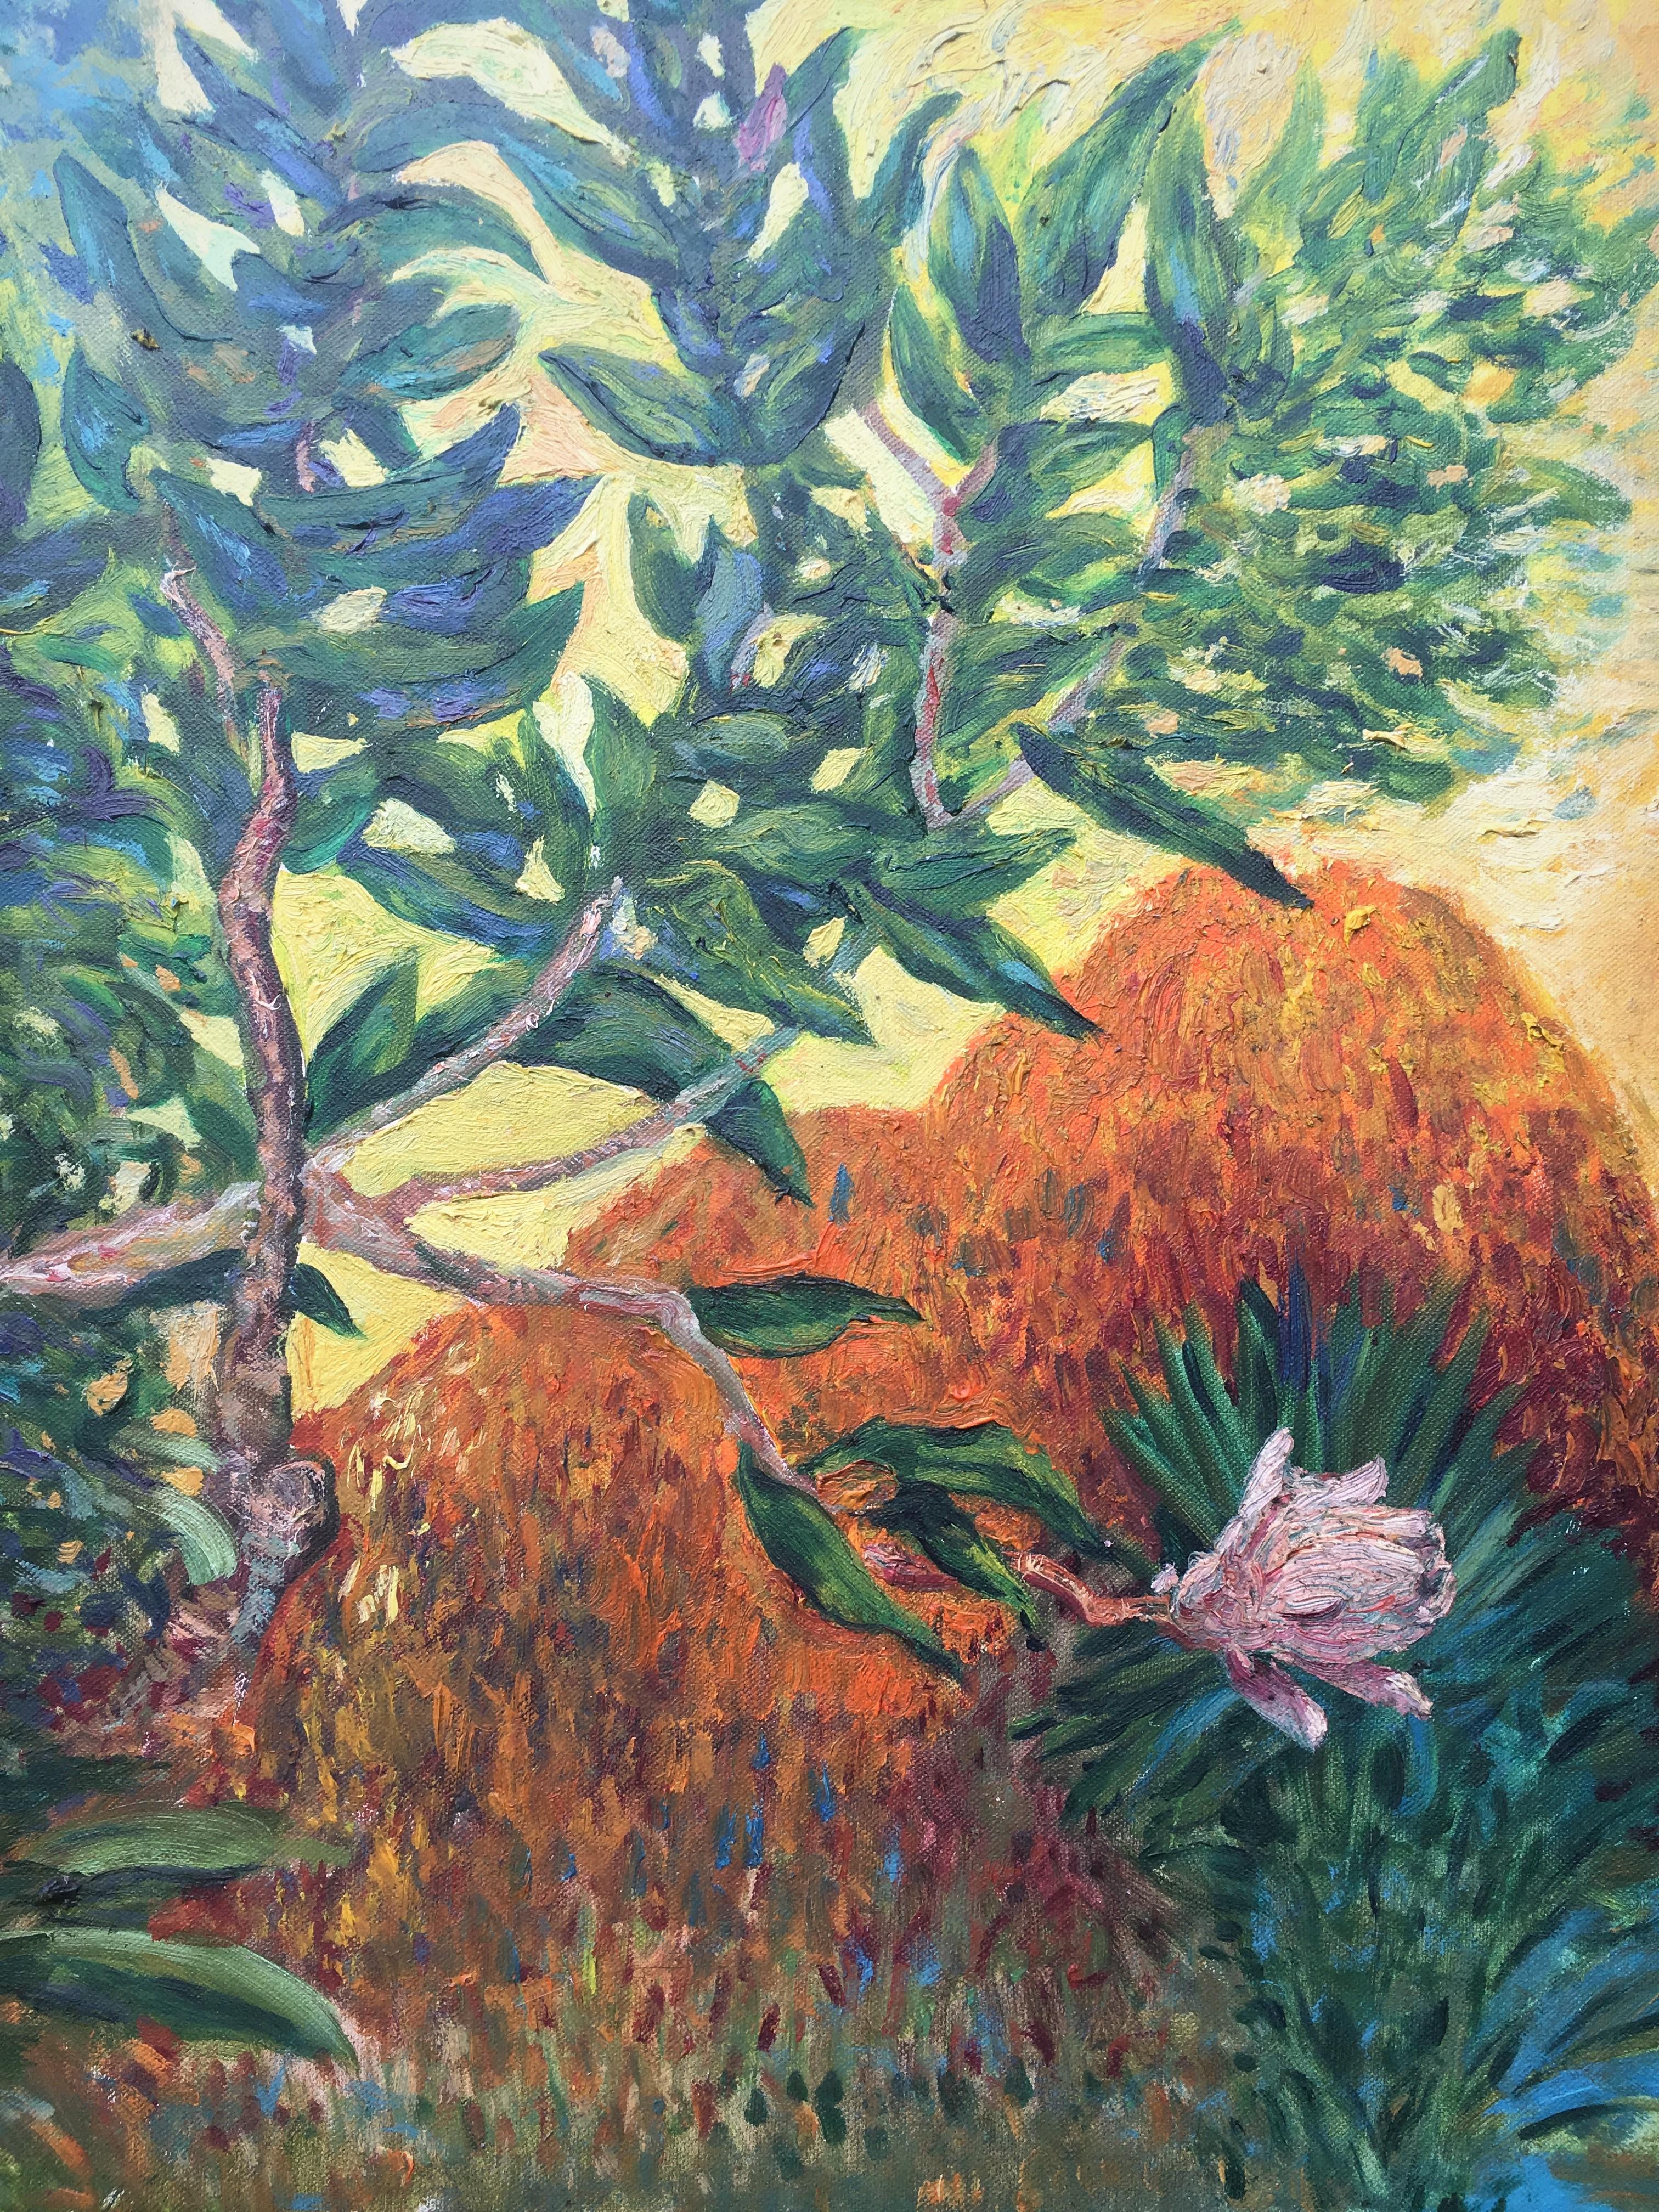 Magnolia - Oil painting on canvas  - Art by Ben Dennett